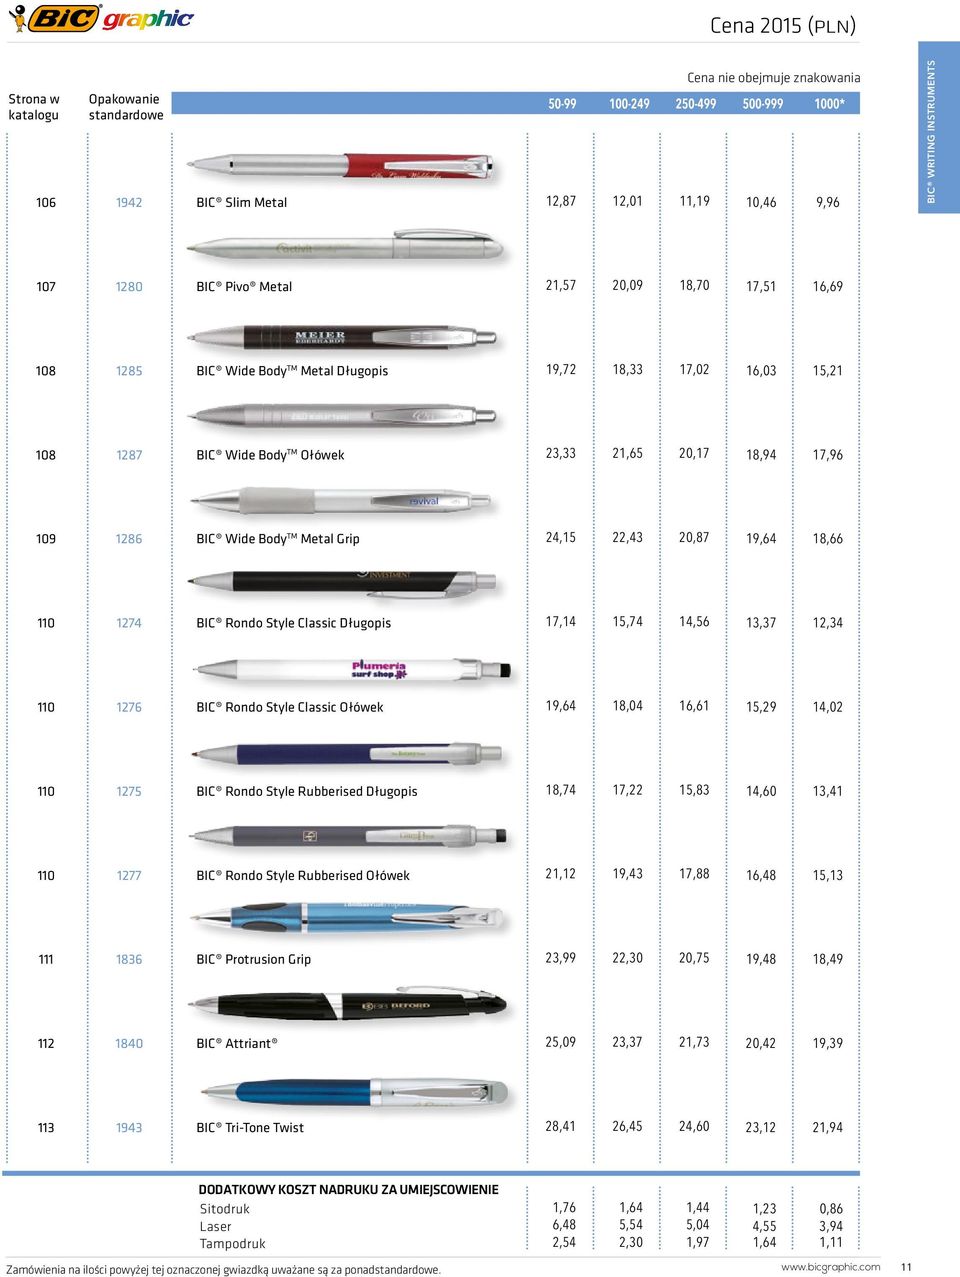 110 1274 BIC Rondo Style Classic Długopis 17,14 15,74 14,56 13,37 12,34 110 1276 BIC Rondo Style Classic Ołówek 19,64 18,04 16,61 15,29 14,02 110 1275 BIC Rondo Style Rubberised Długopis 18,74 17,22